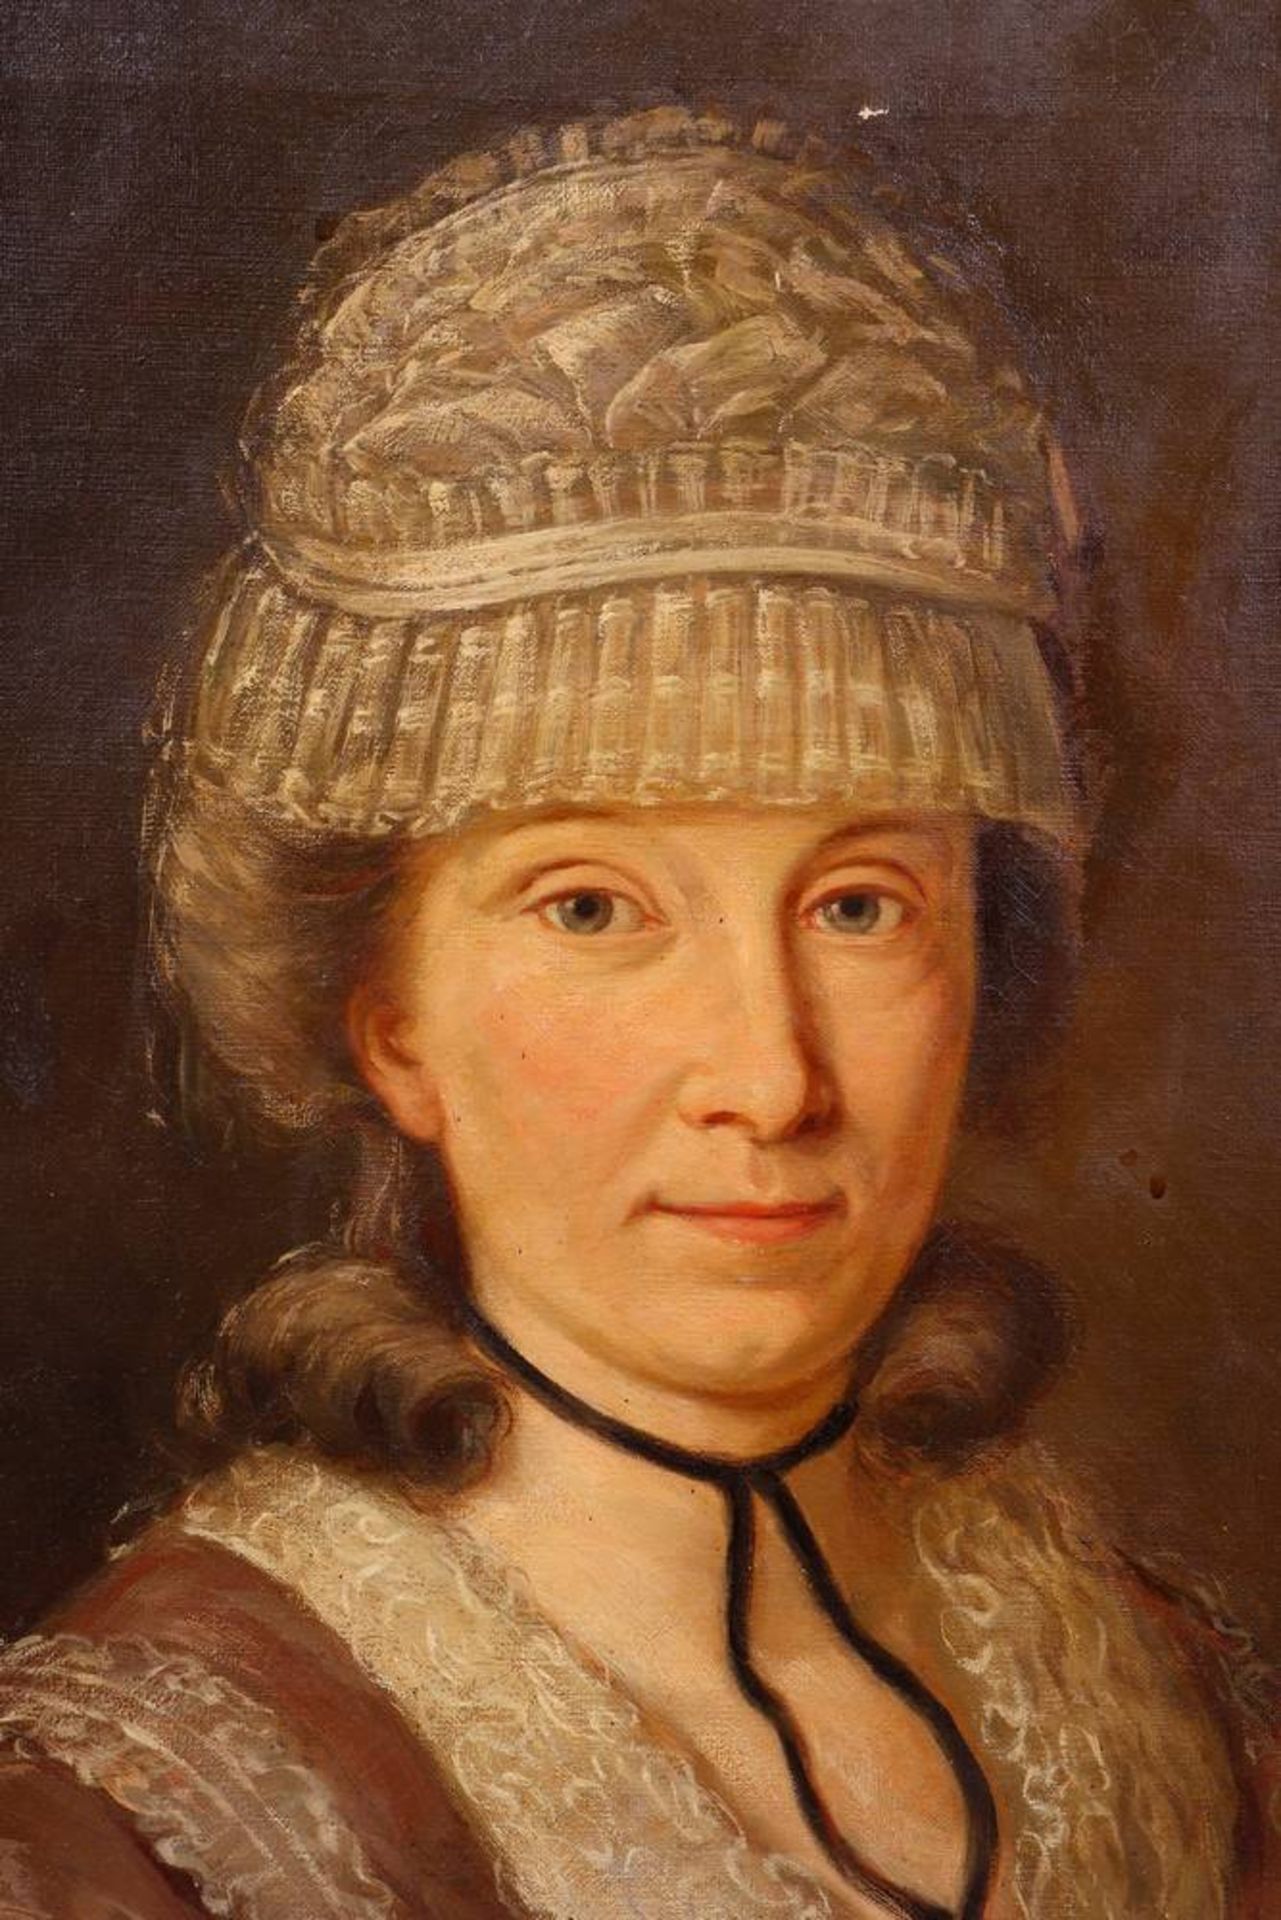 Portrait of a Lady with a Lace Bonnet, 18th/19th C. - Image 3 of 6